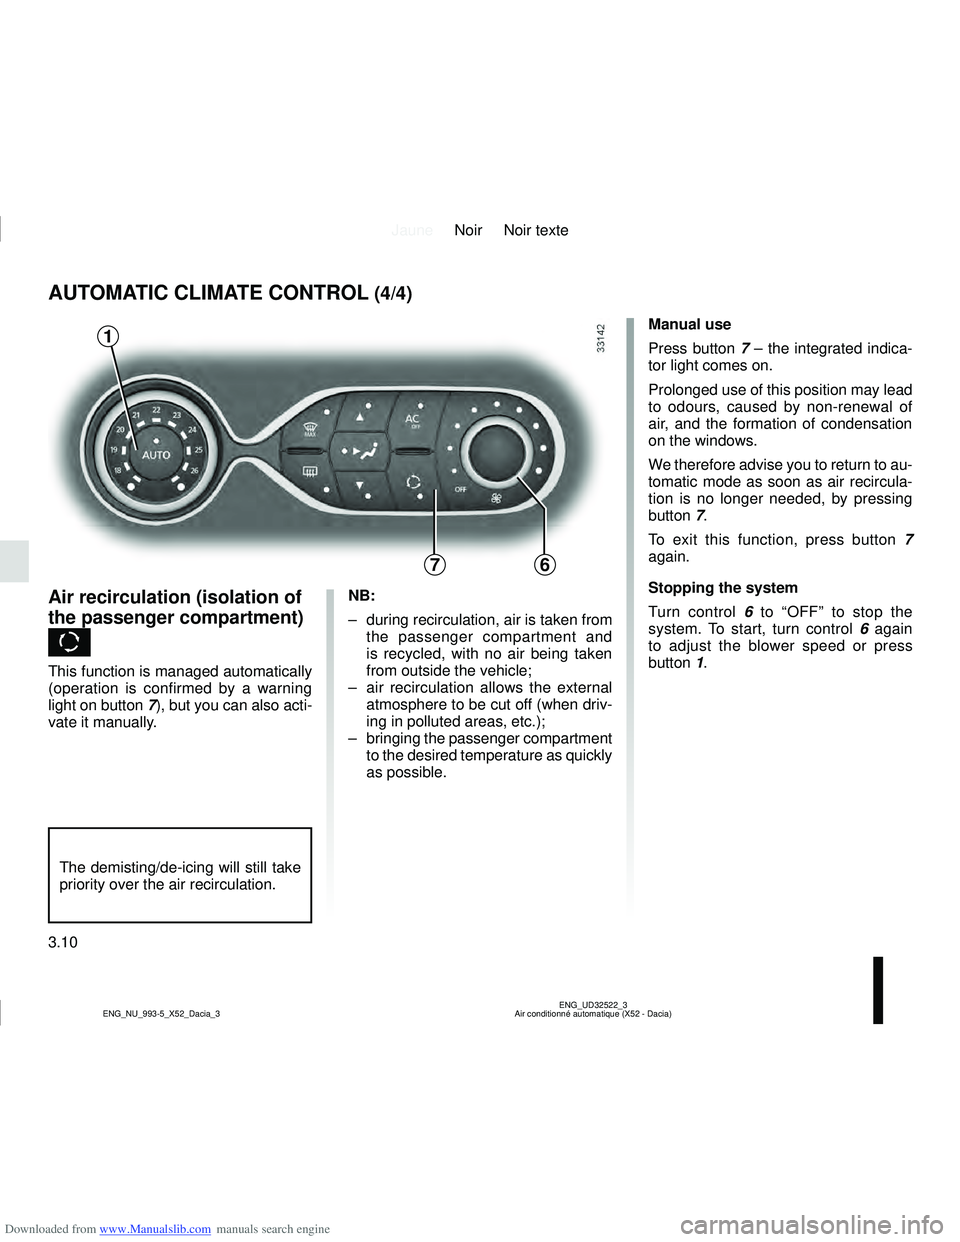 DACIA LOGAN 2011  Owners Manual Downloaded from www.Manualslib.com manuals search engine JauneNoir Noir texte
3.10
ENG_UD32522_3
Air conditionné automatique (X52 - Dacia)
ENG_NU_993-5_X52_Dacia_3
AUTOMATIC CLIMATE CONTROL (4/4)
76
